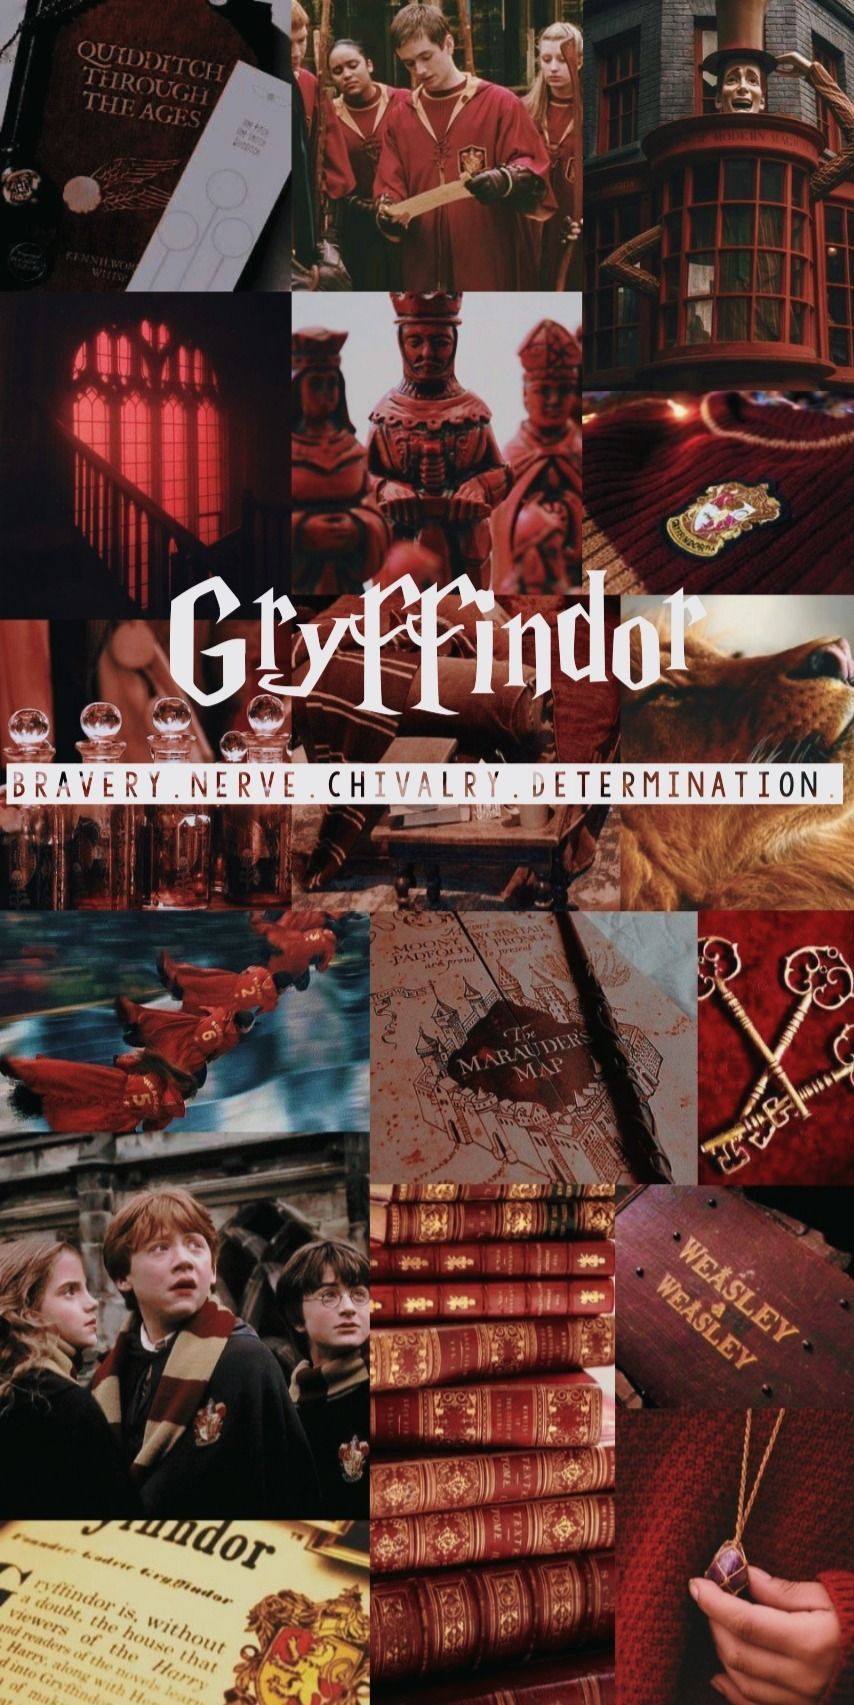 Harry Potter aesthetic wallpaper background red Gryffindor - Harry Potter, Hogwarts, Gryffindor